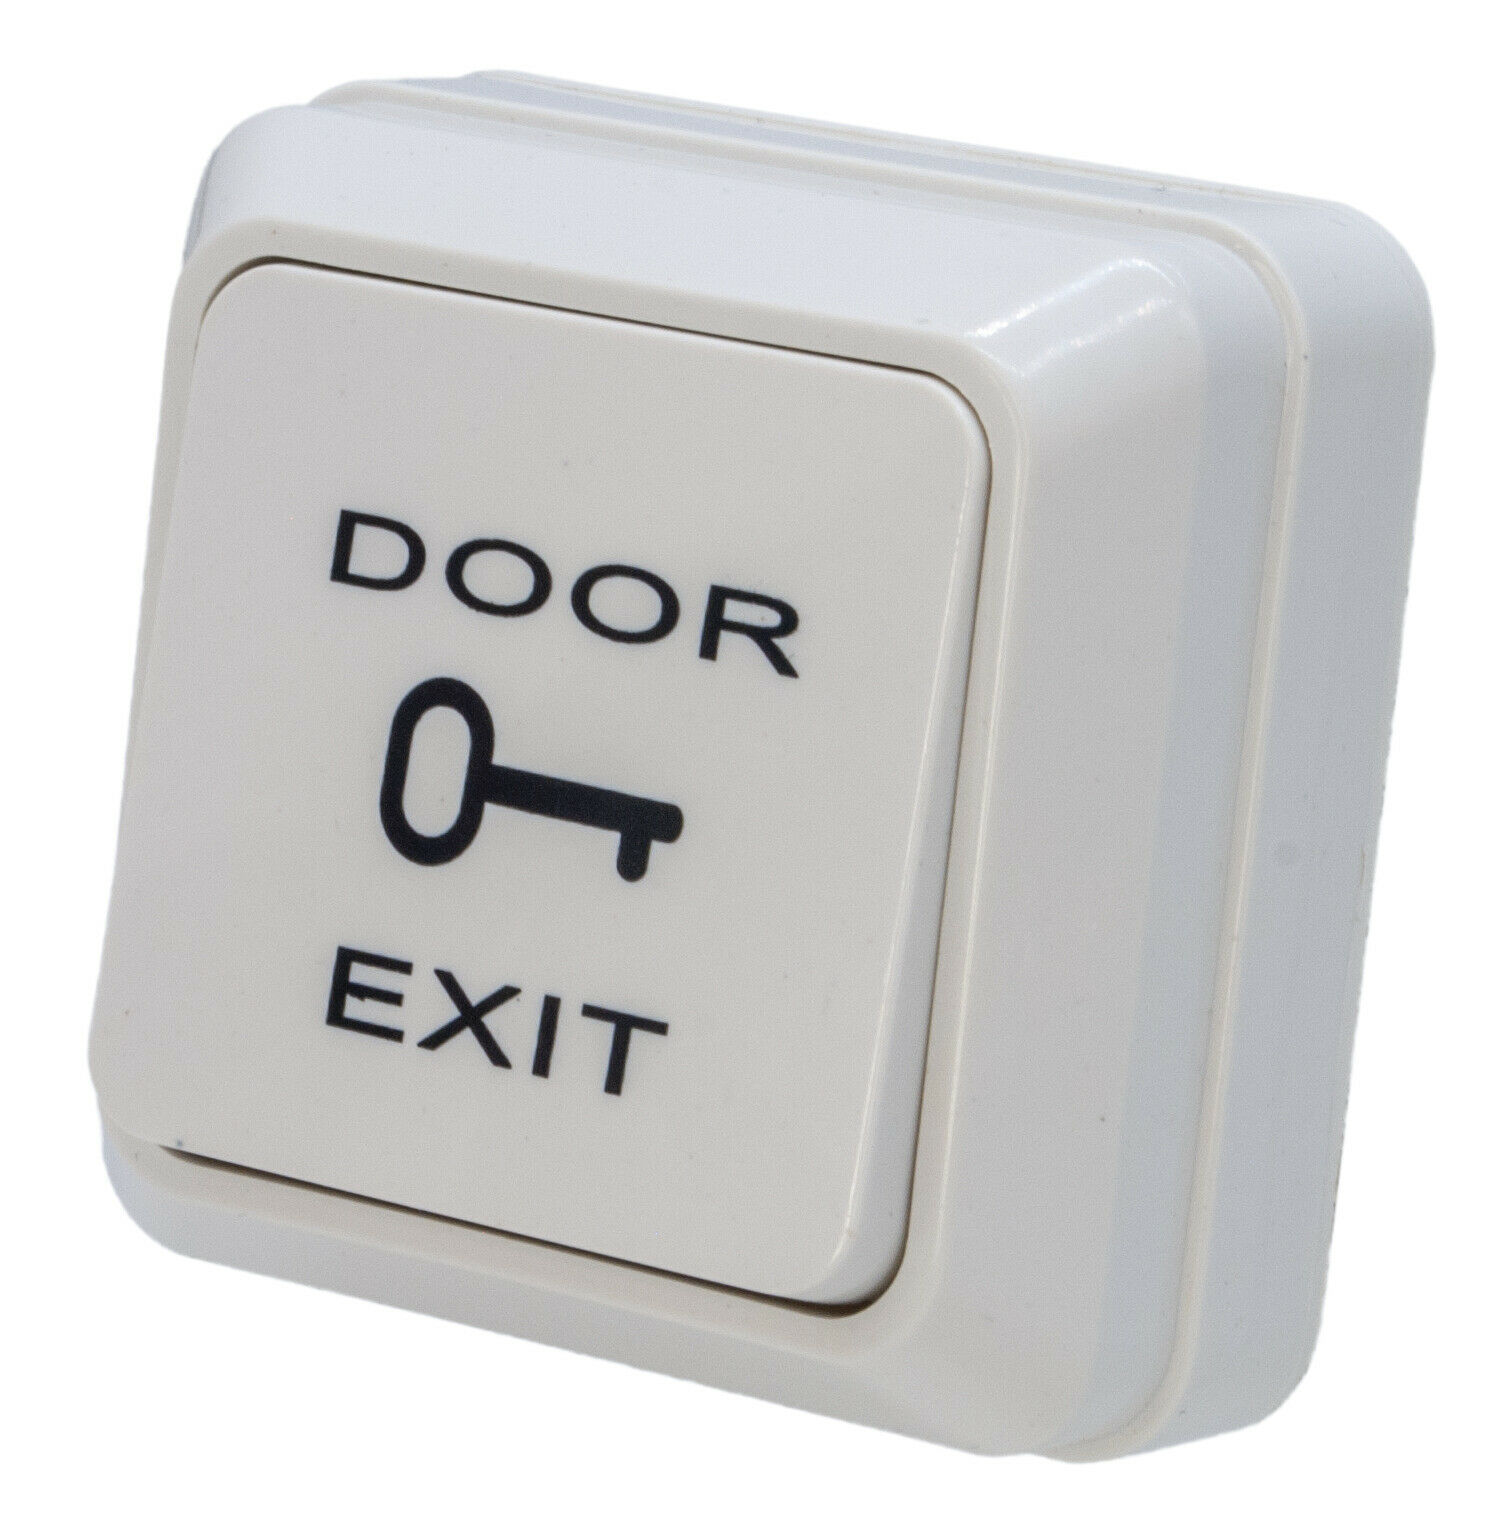 Flush Mounting Door Exit Push Button - $23.88